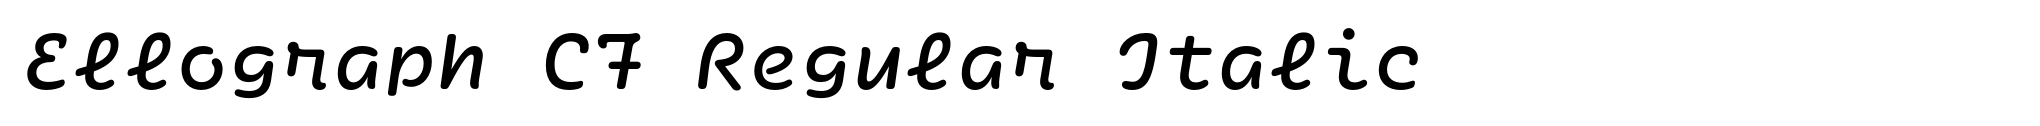 Ellograph CF Regular Italic image